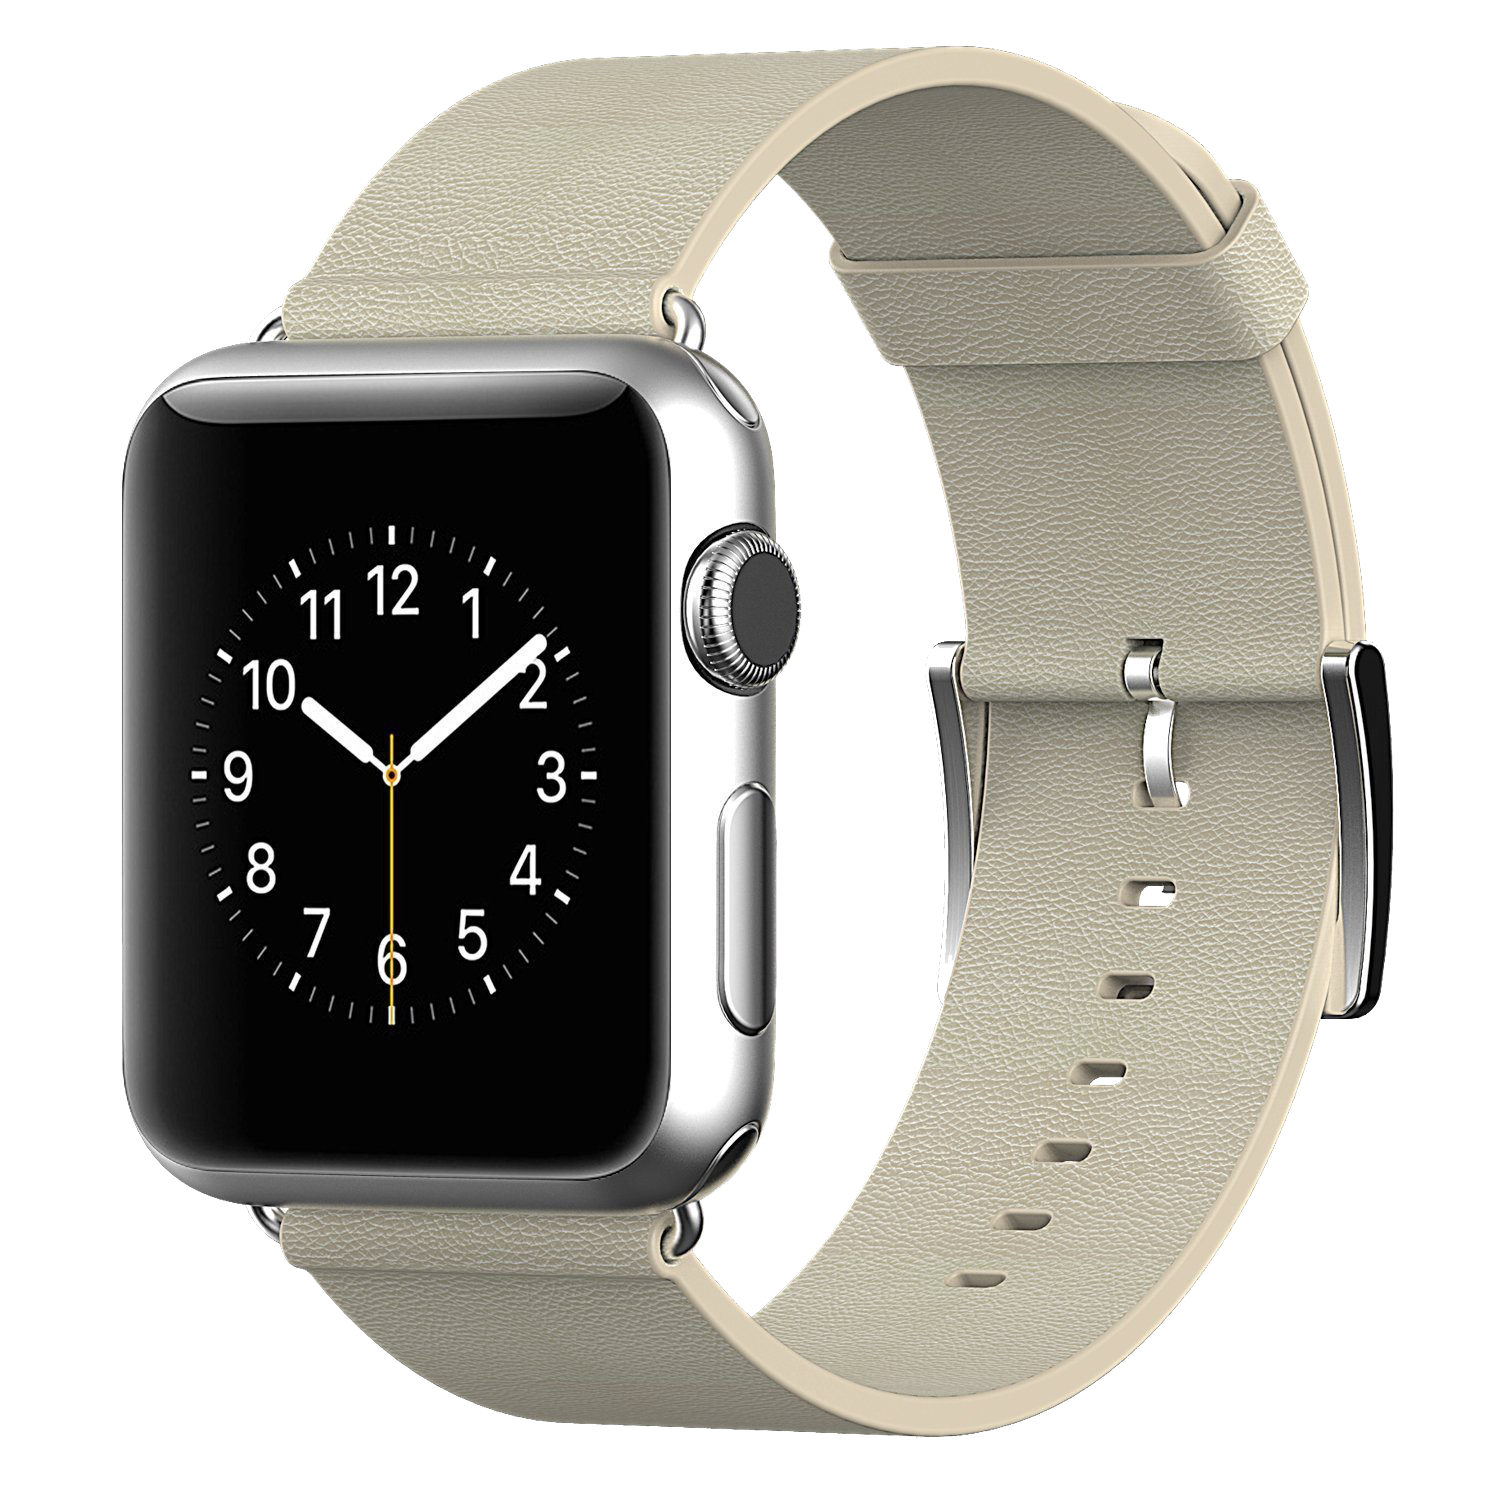 Apple Watch PNG Transparent Image